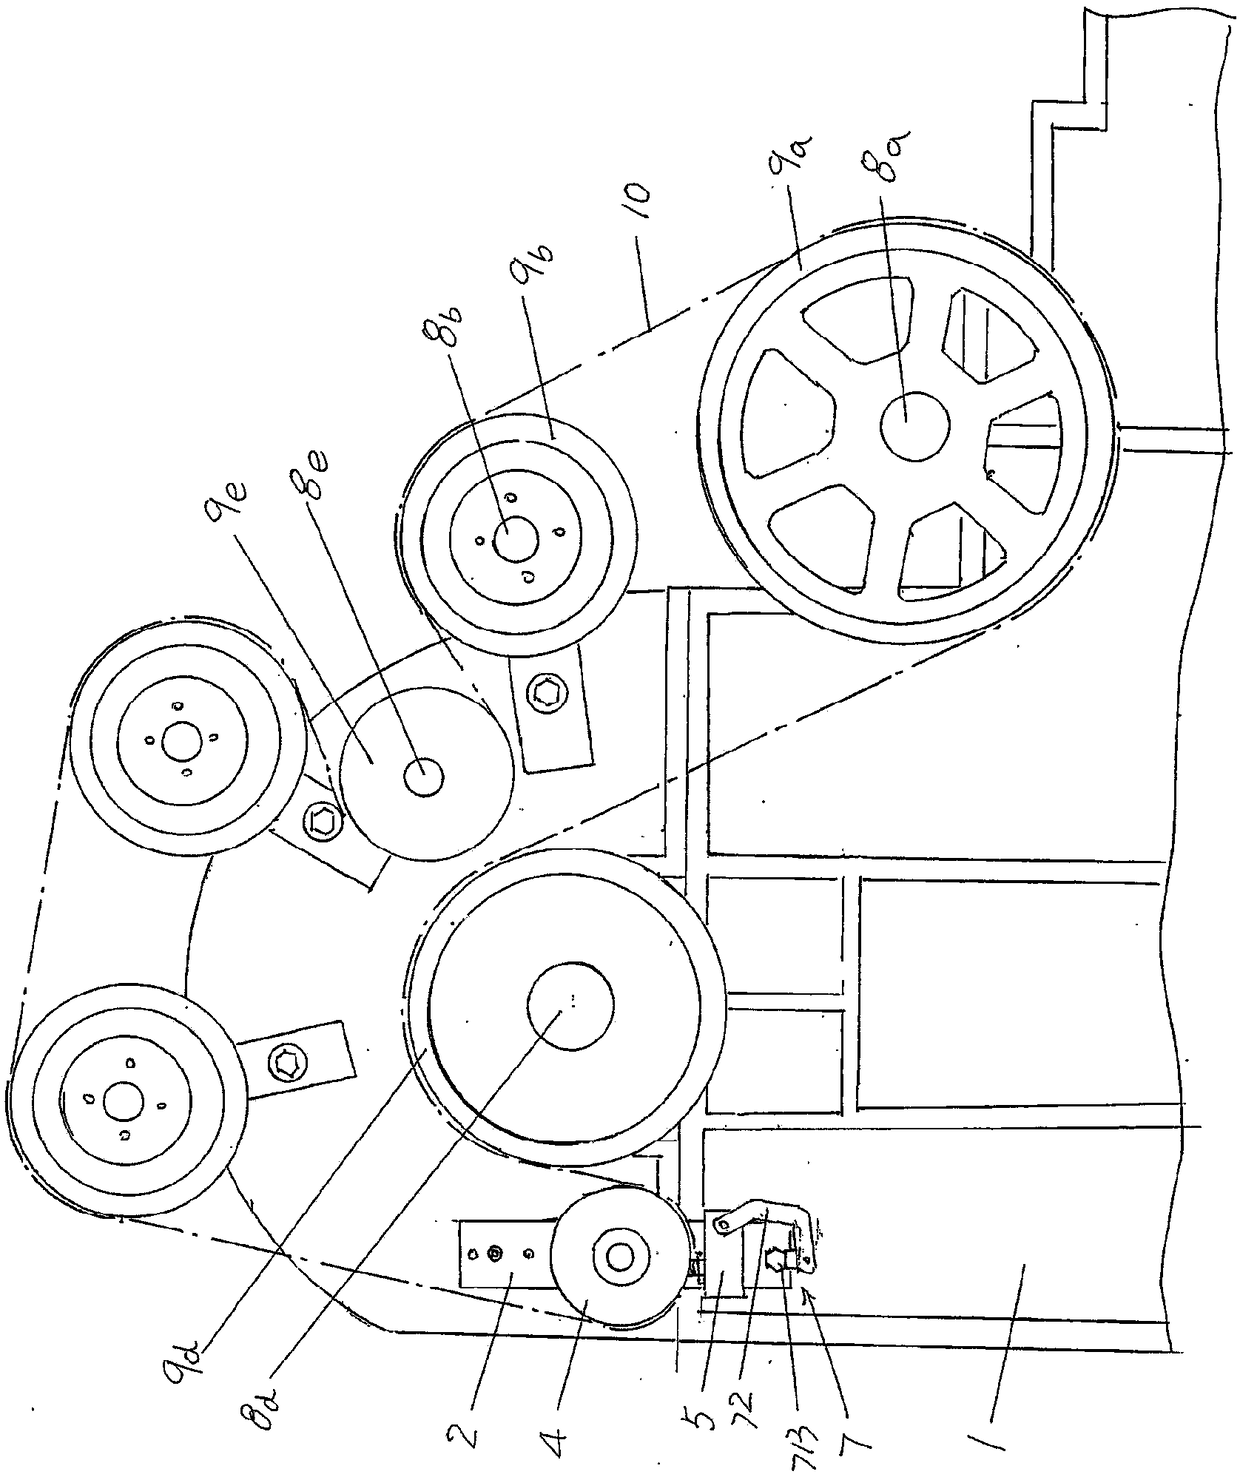 Carding machine drive belt tensioner